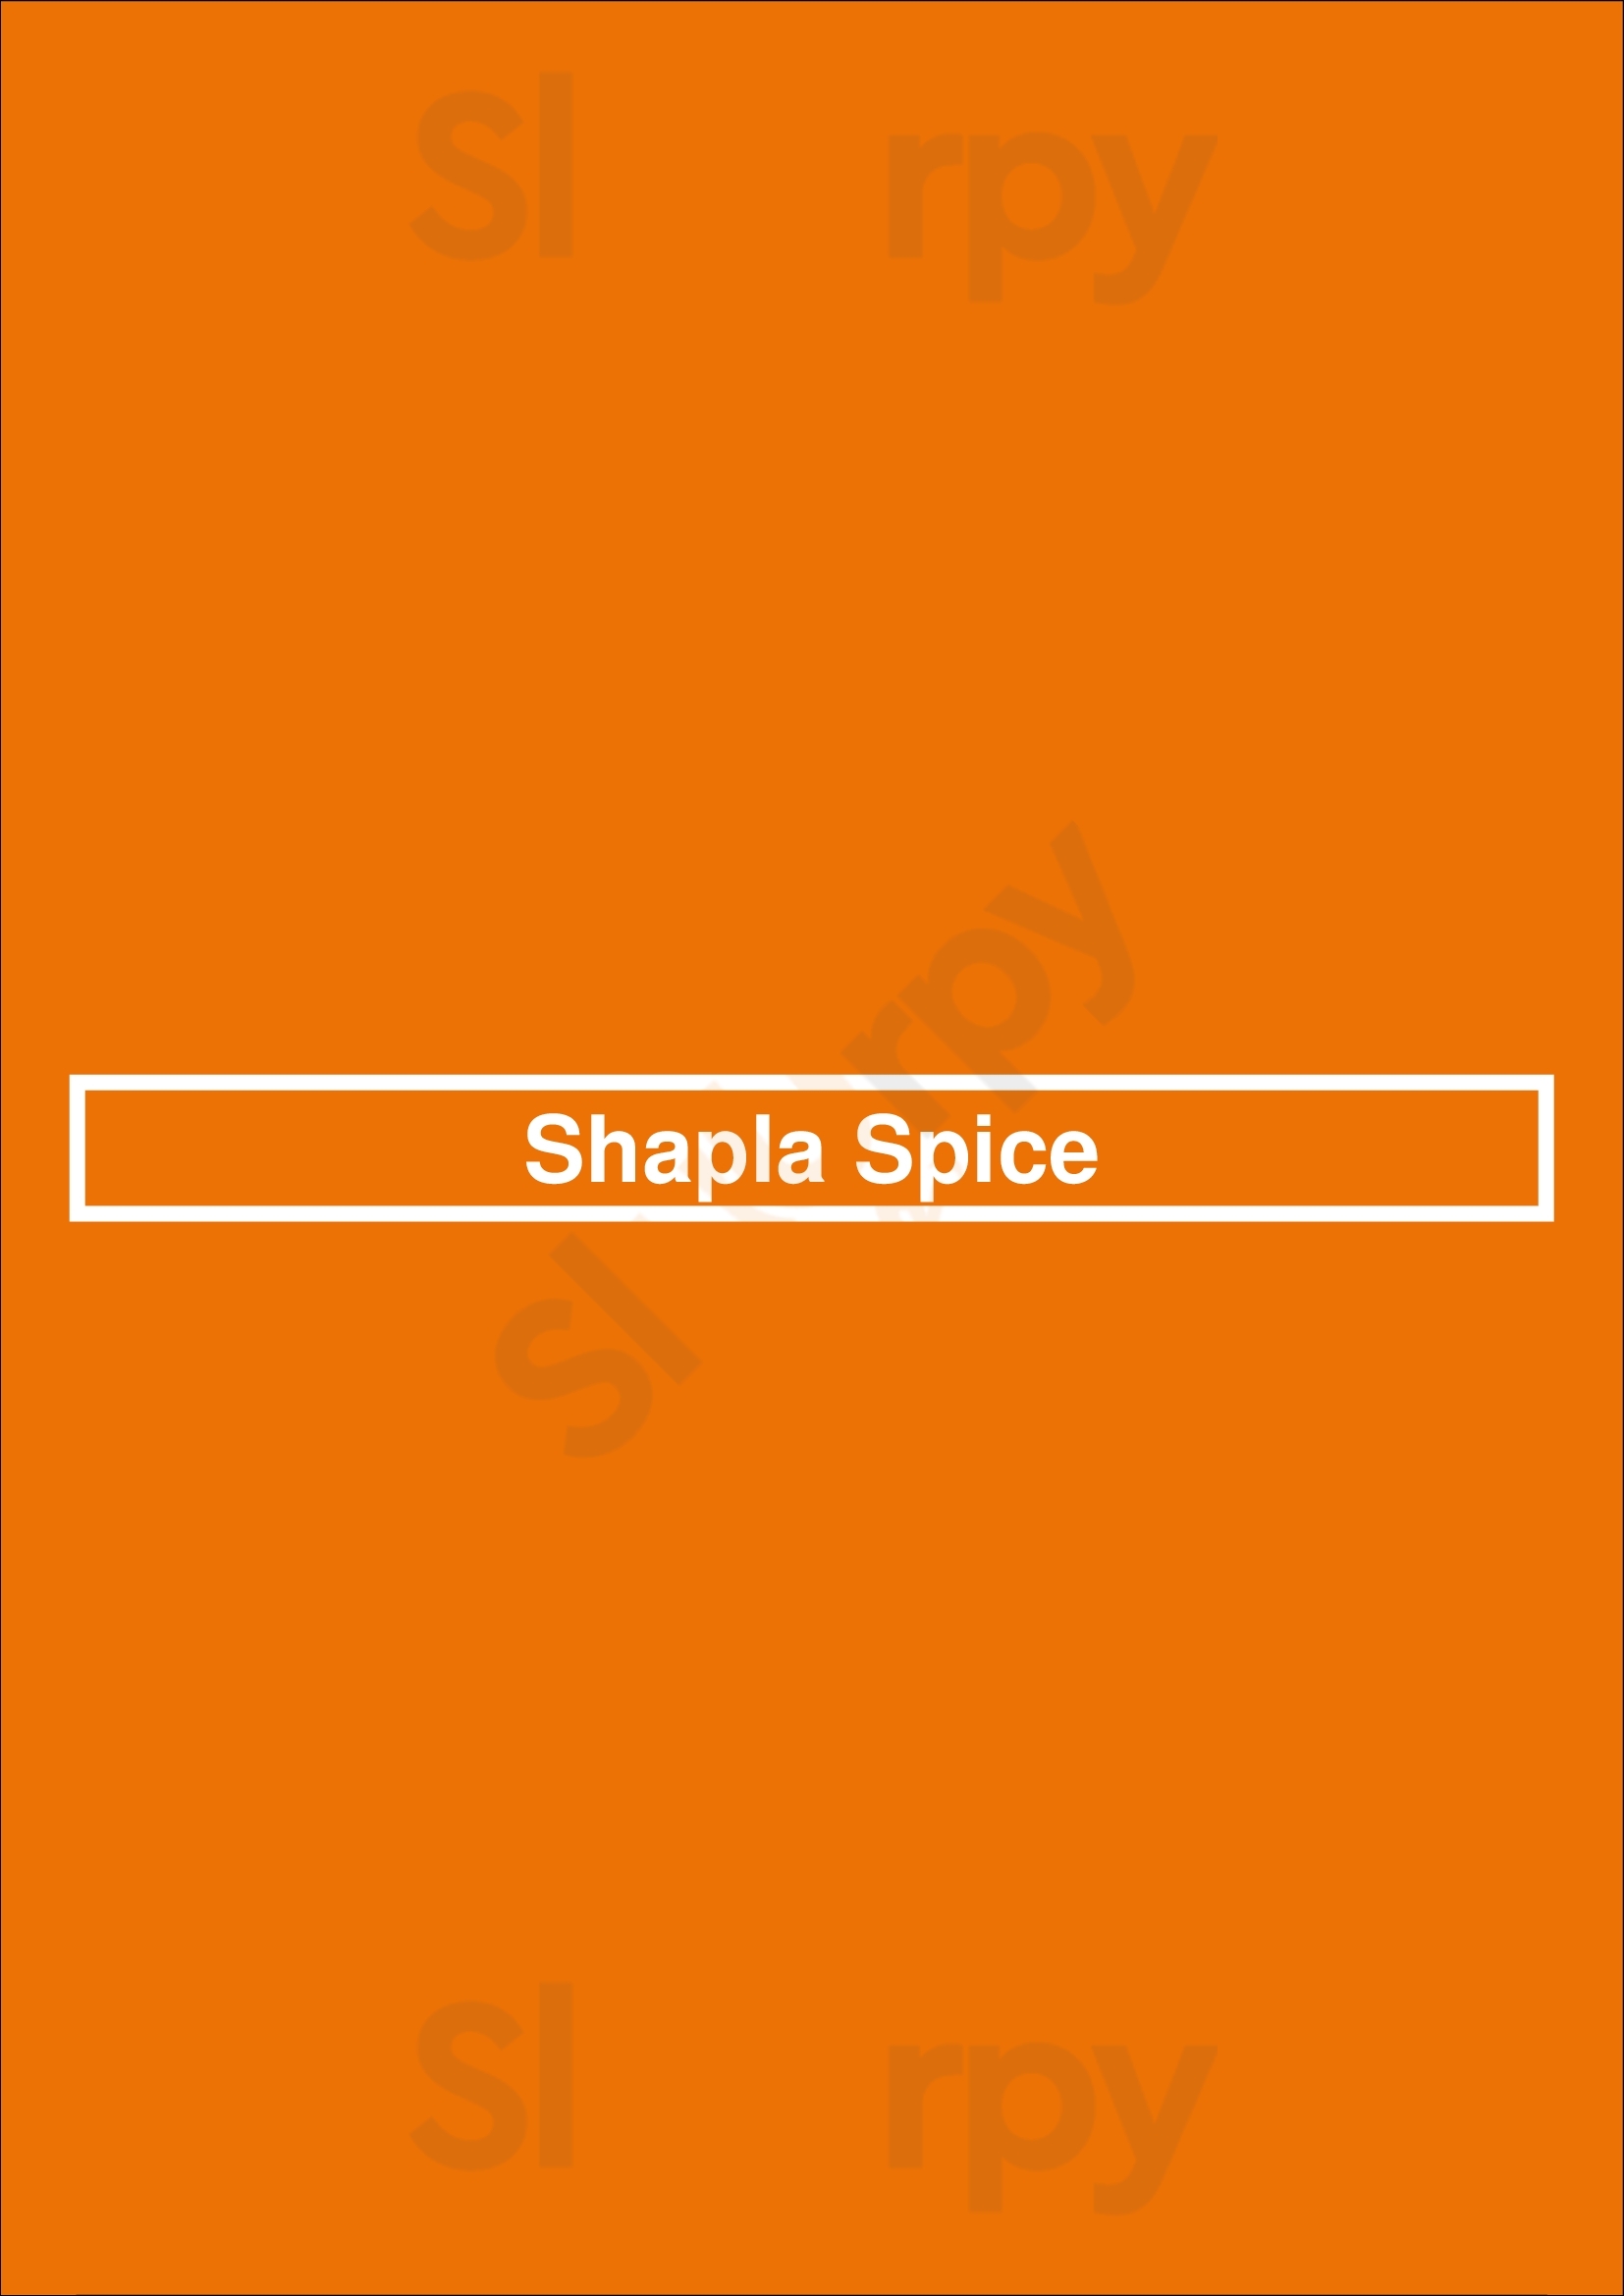 Shapla Spice Blackpool Menu - 1